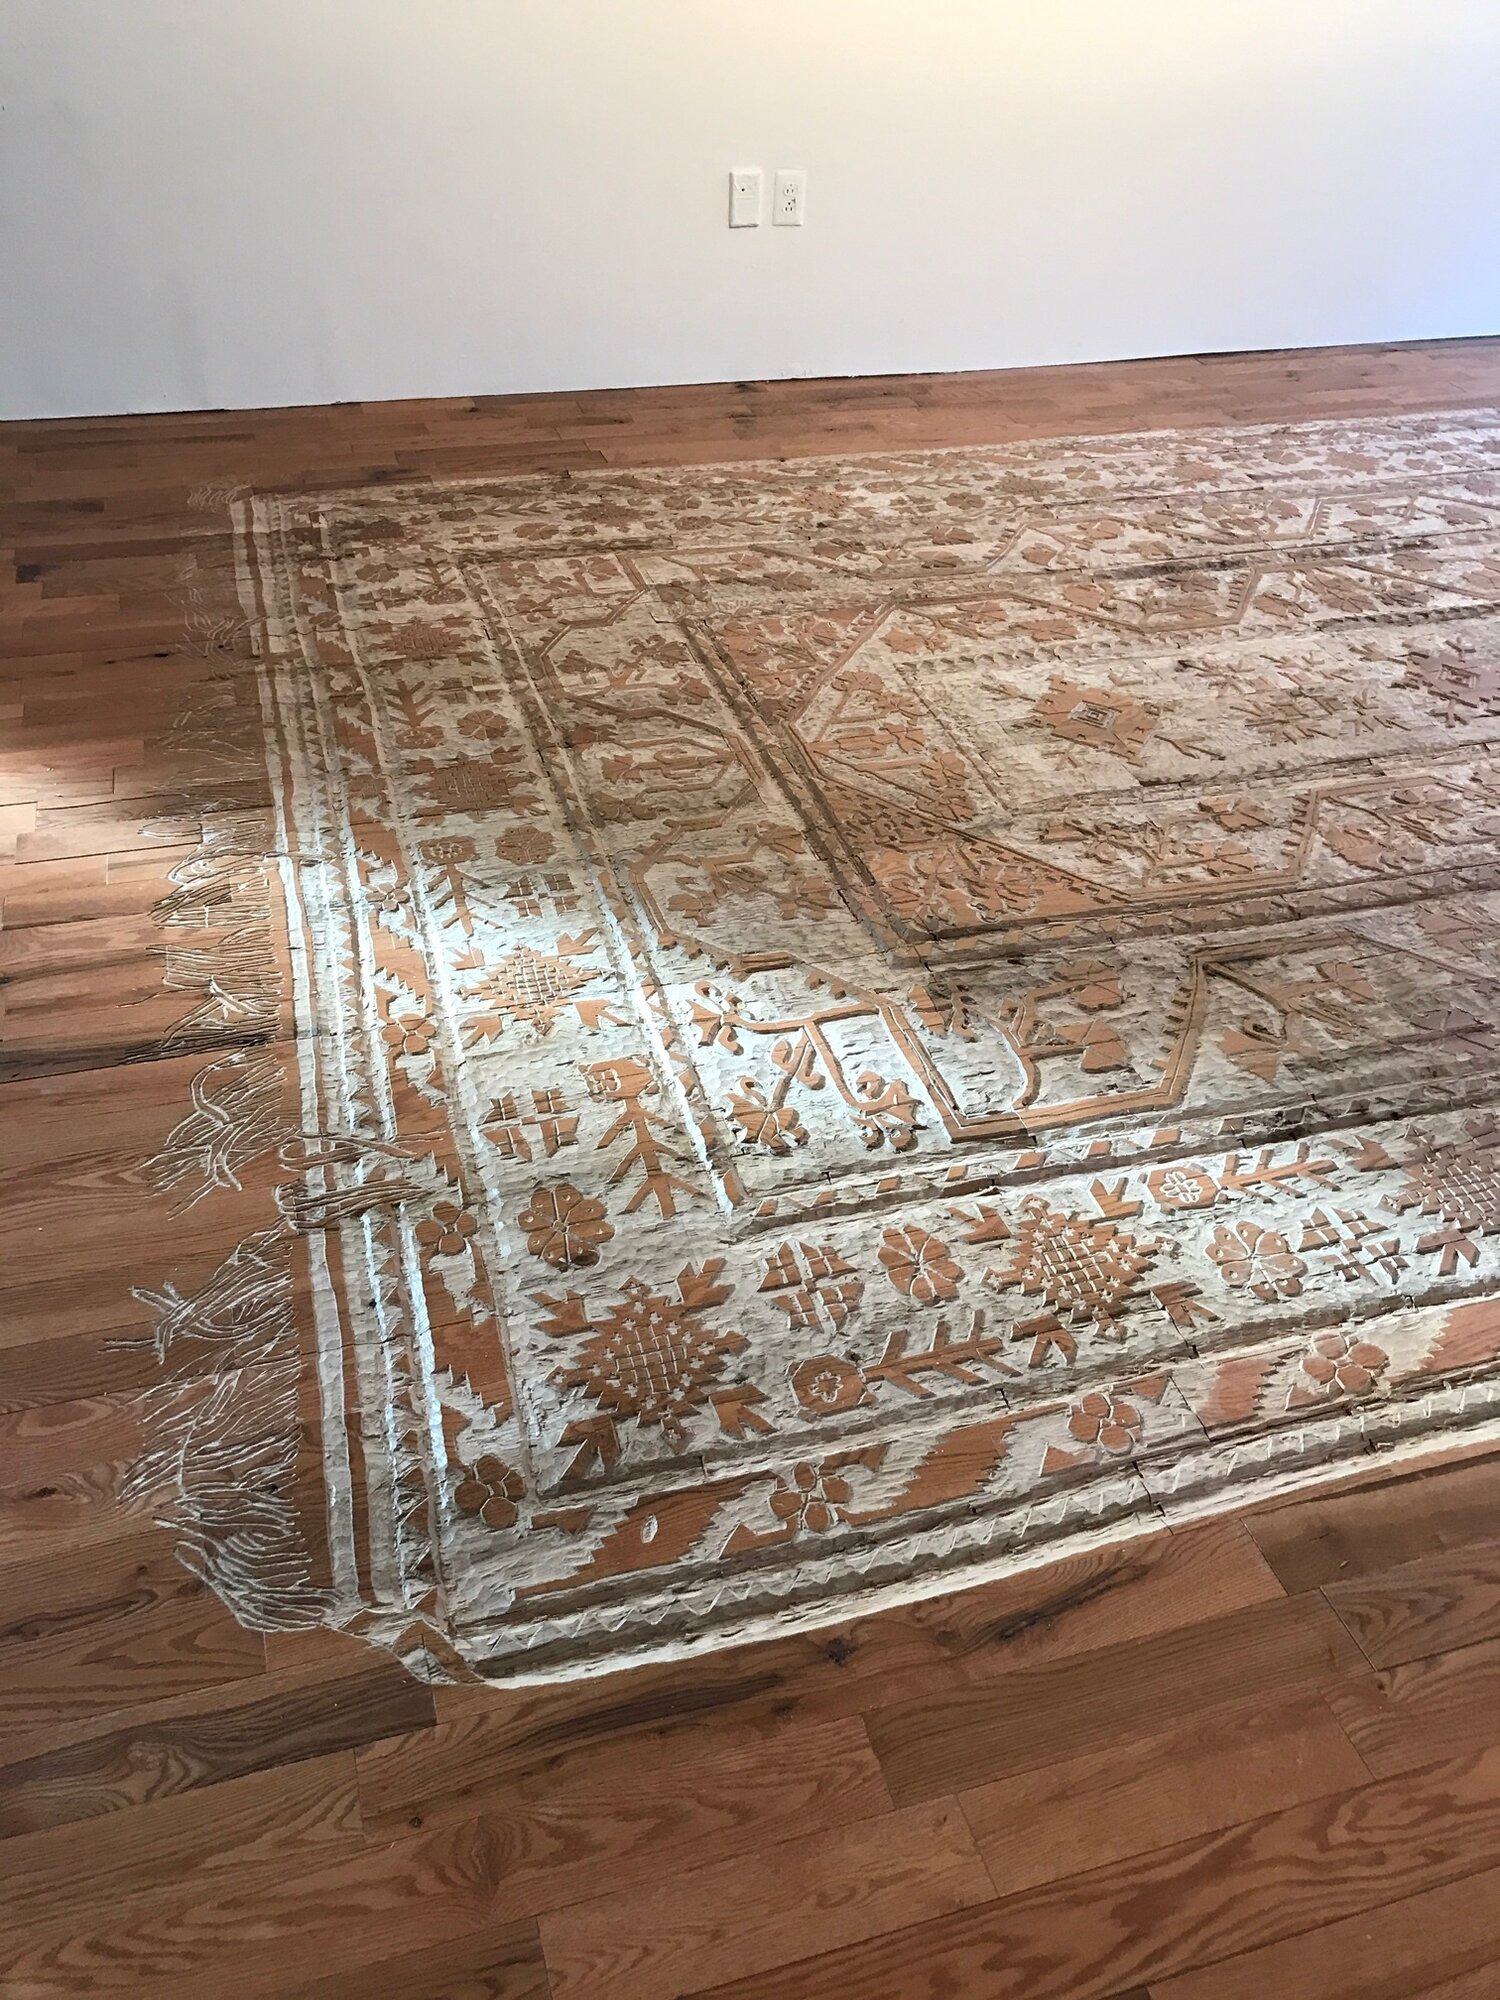 Spanish artist carves a rug into wooden floors